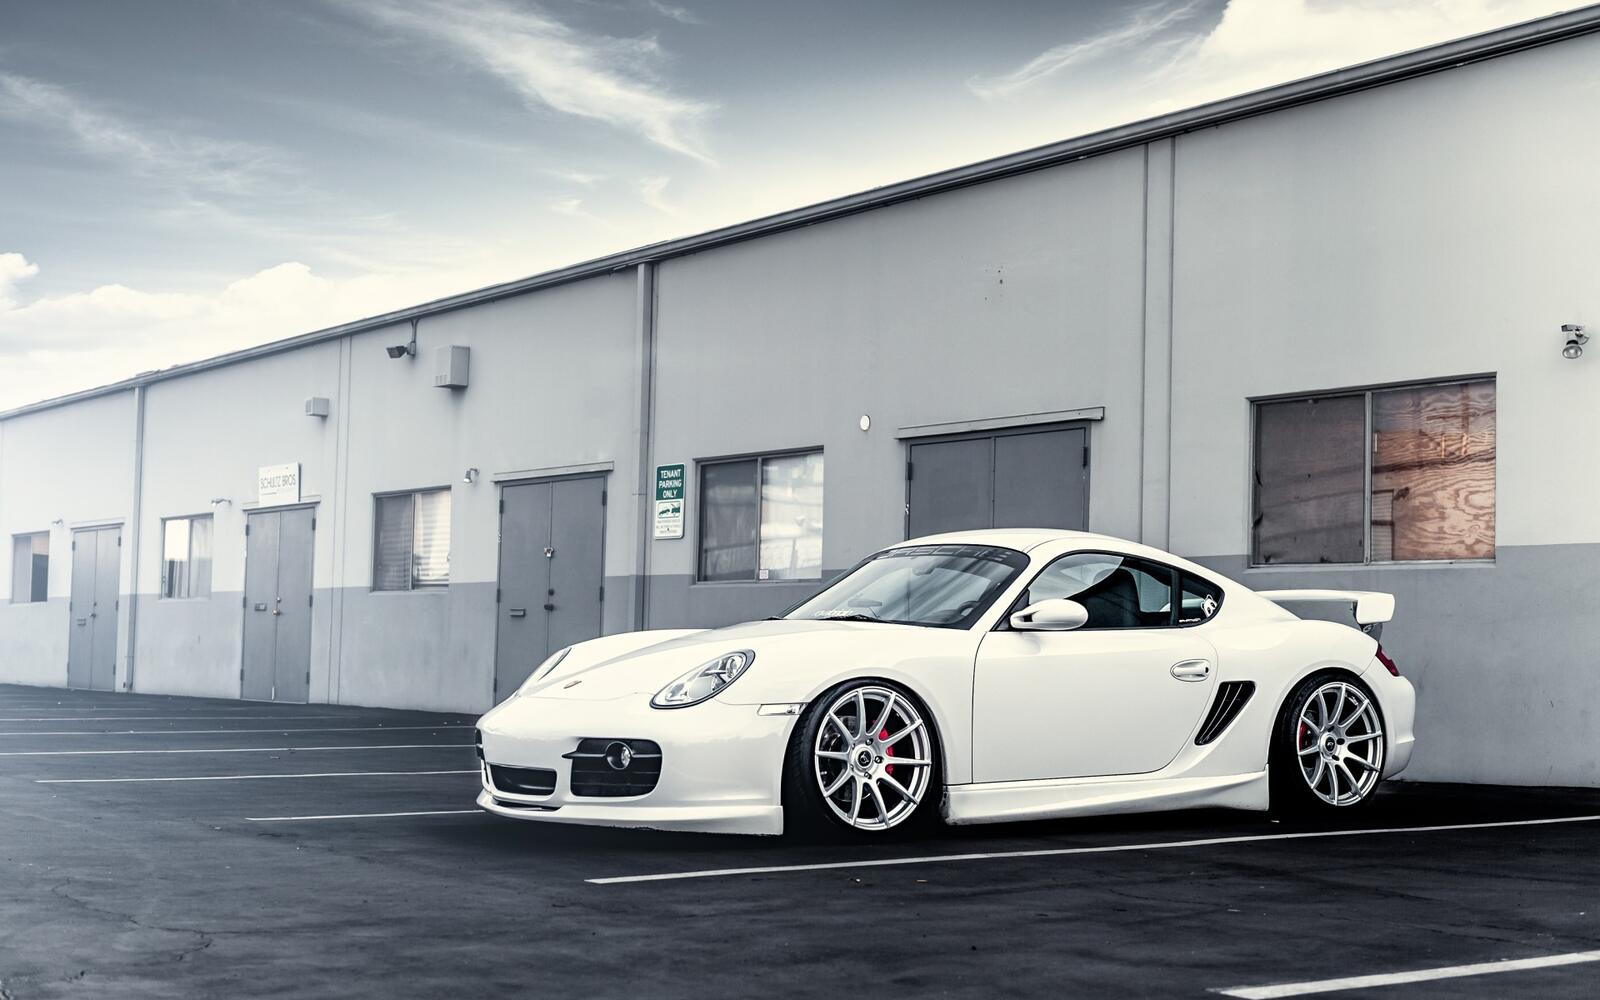 Free photo White Porsche in the parking lot